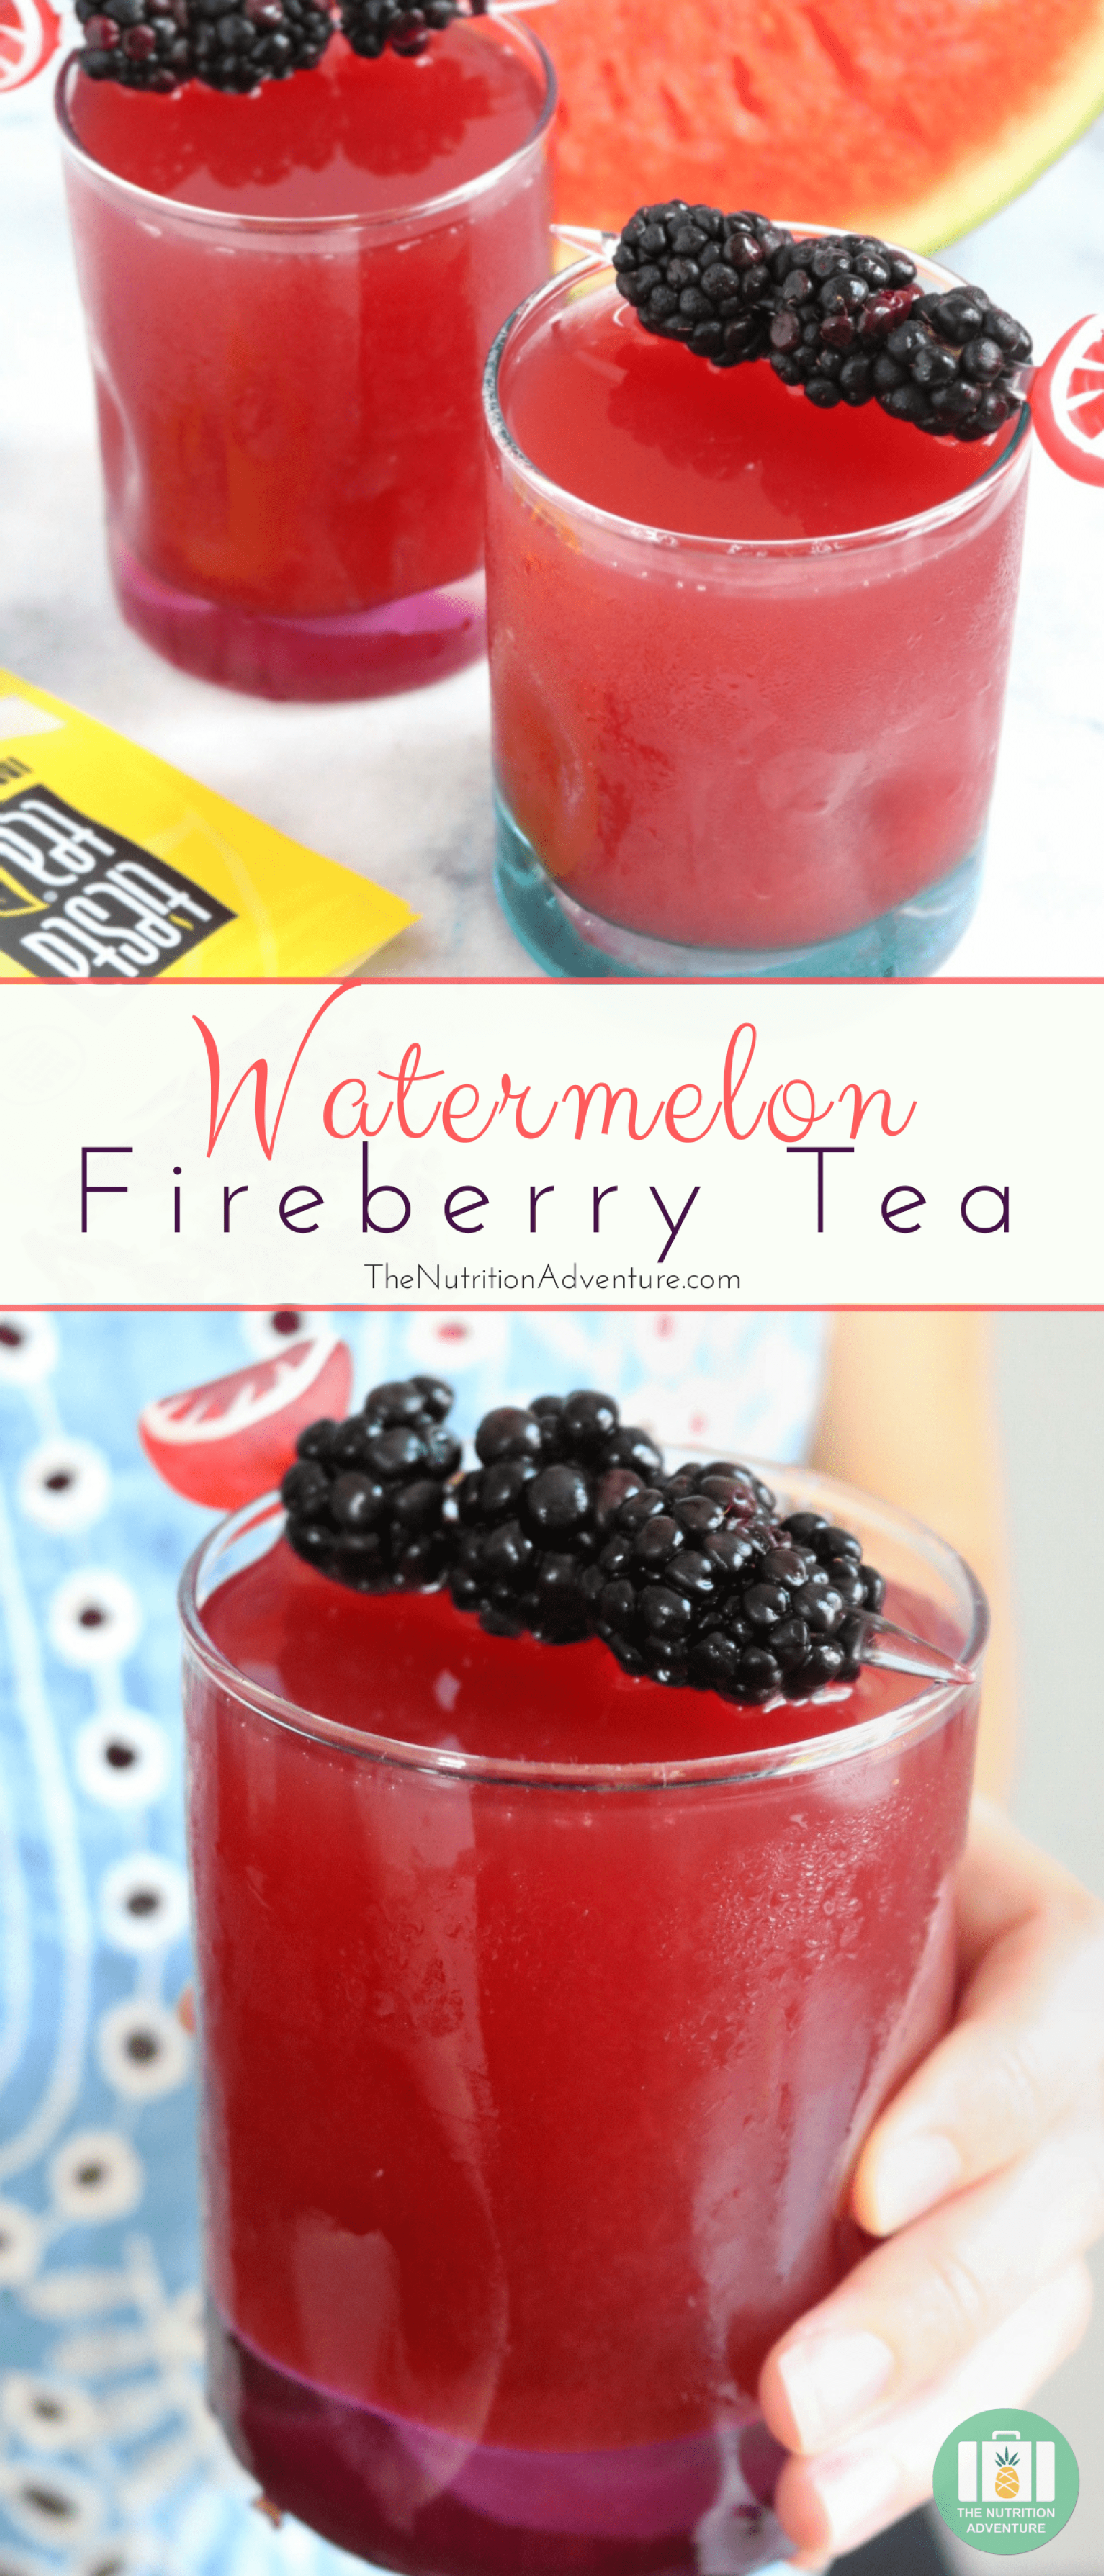 Watermelon Fireberry Tea | The Nutrition Adventure